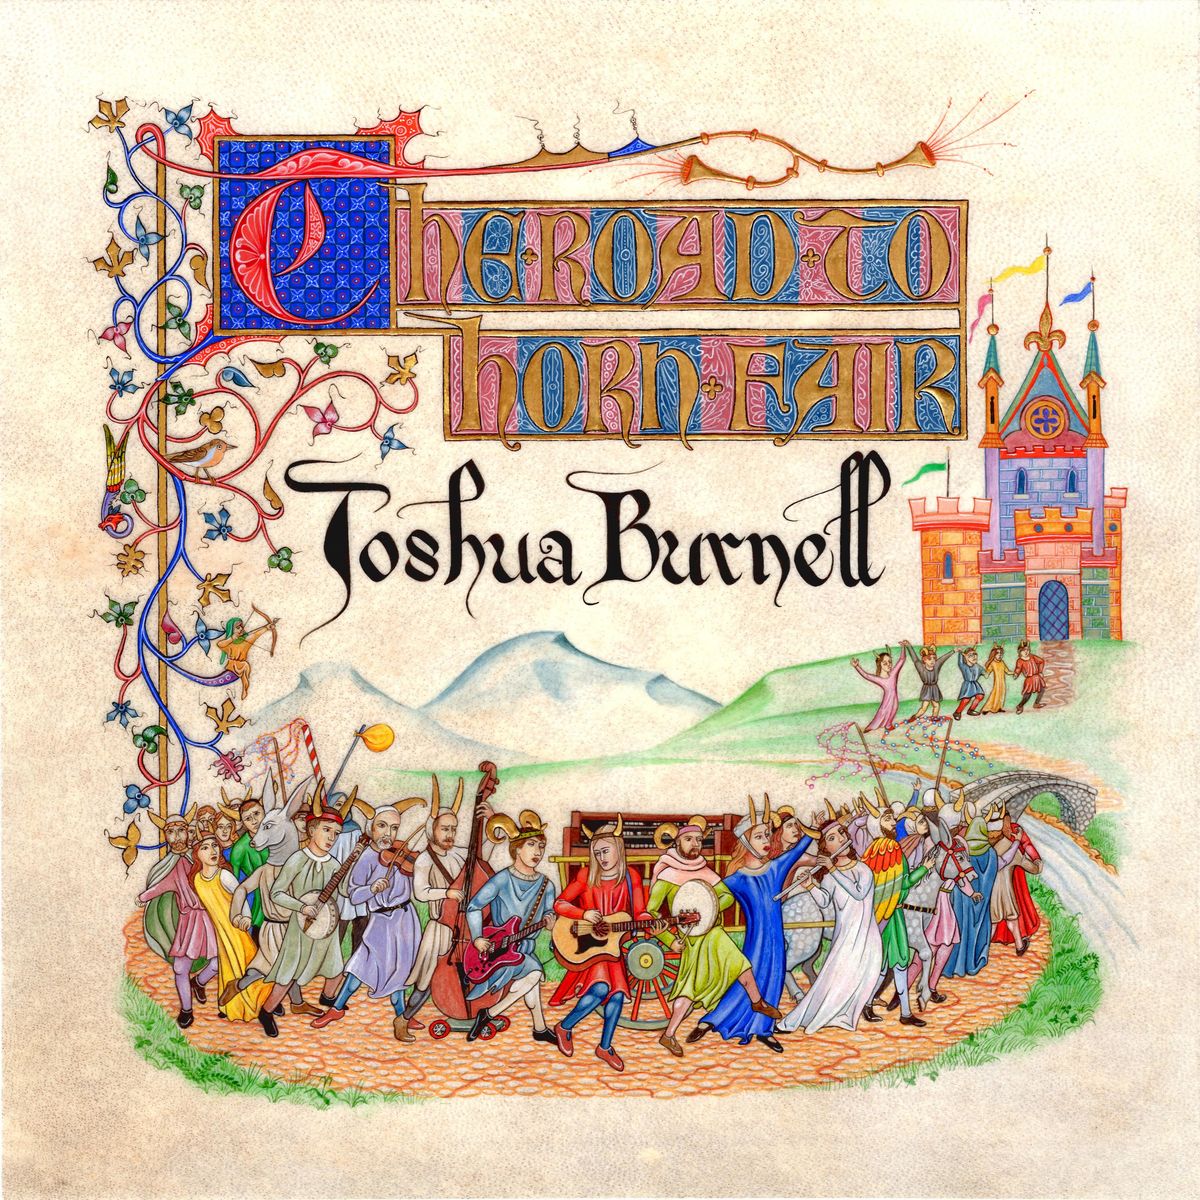 Joshua Burnell - 2019 - The Road to Horn Fair